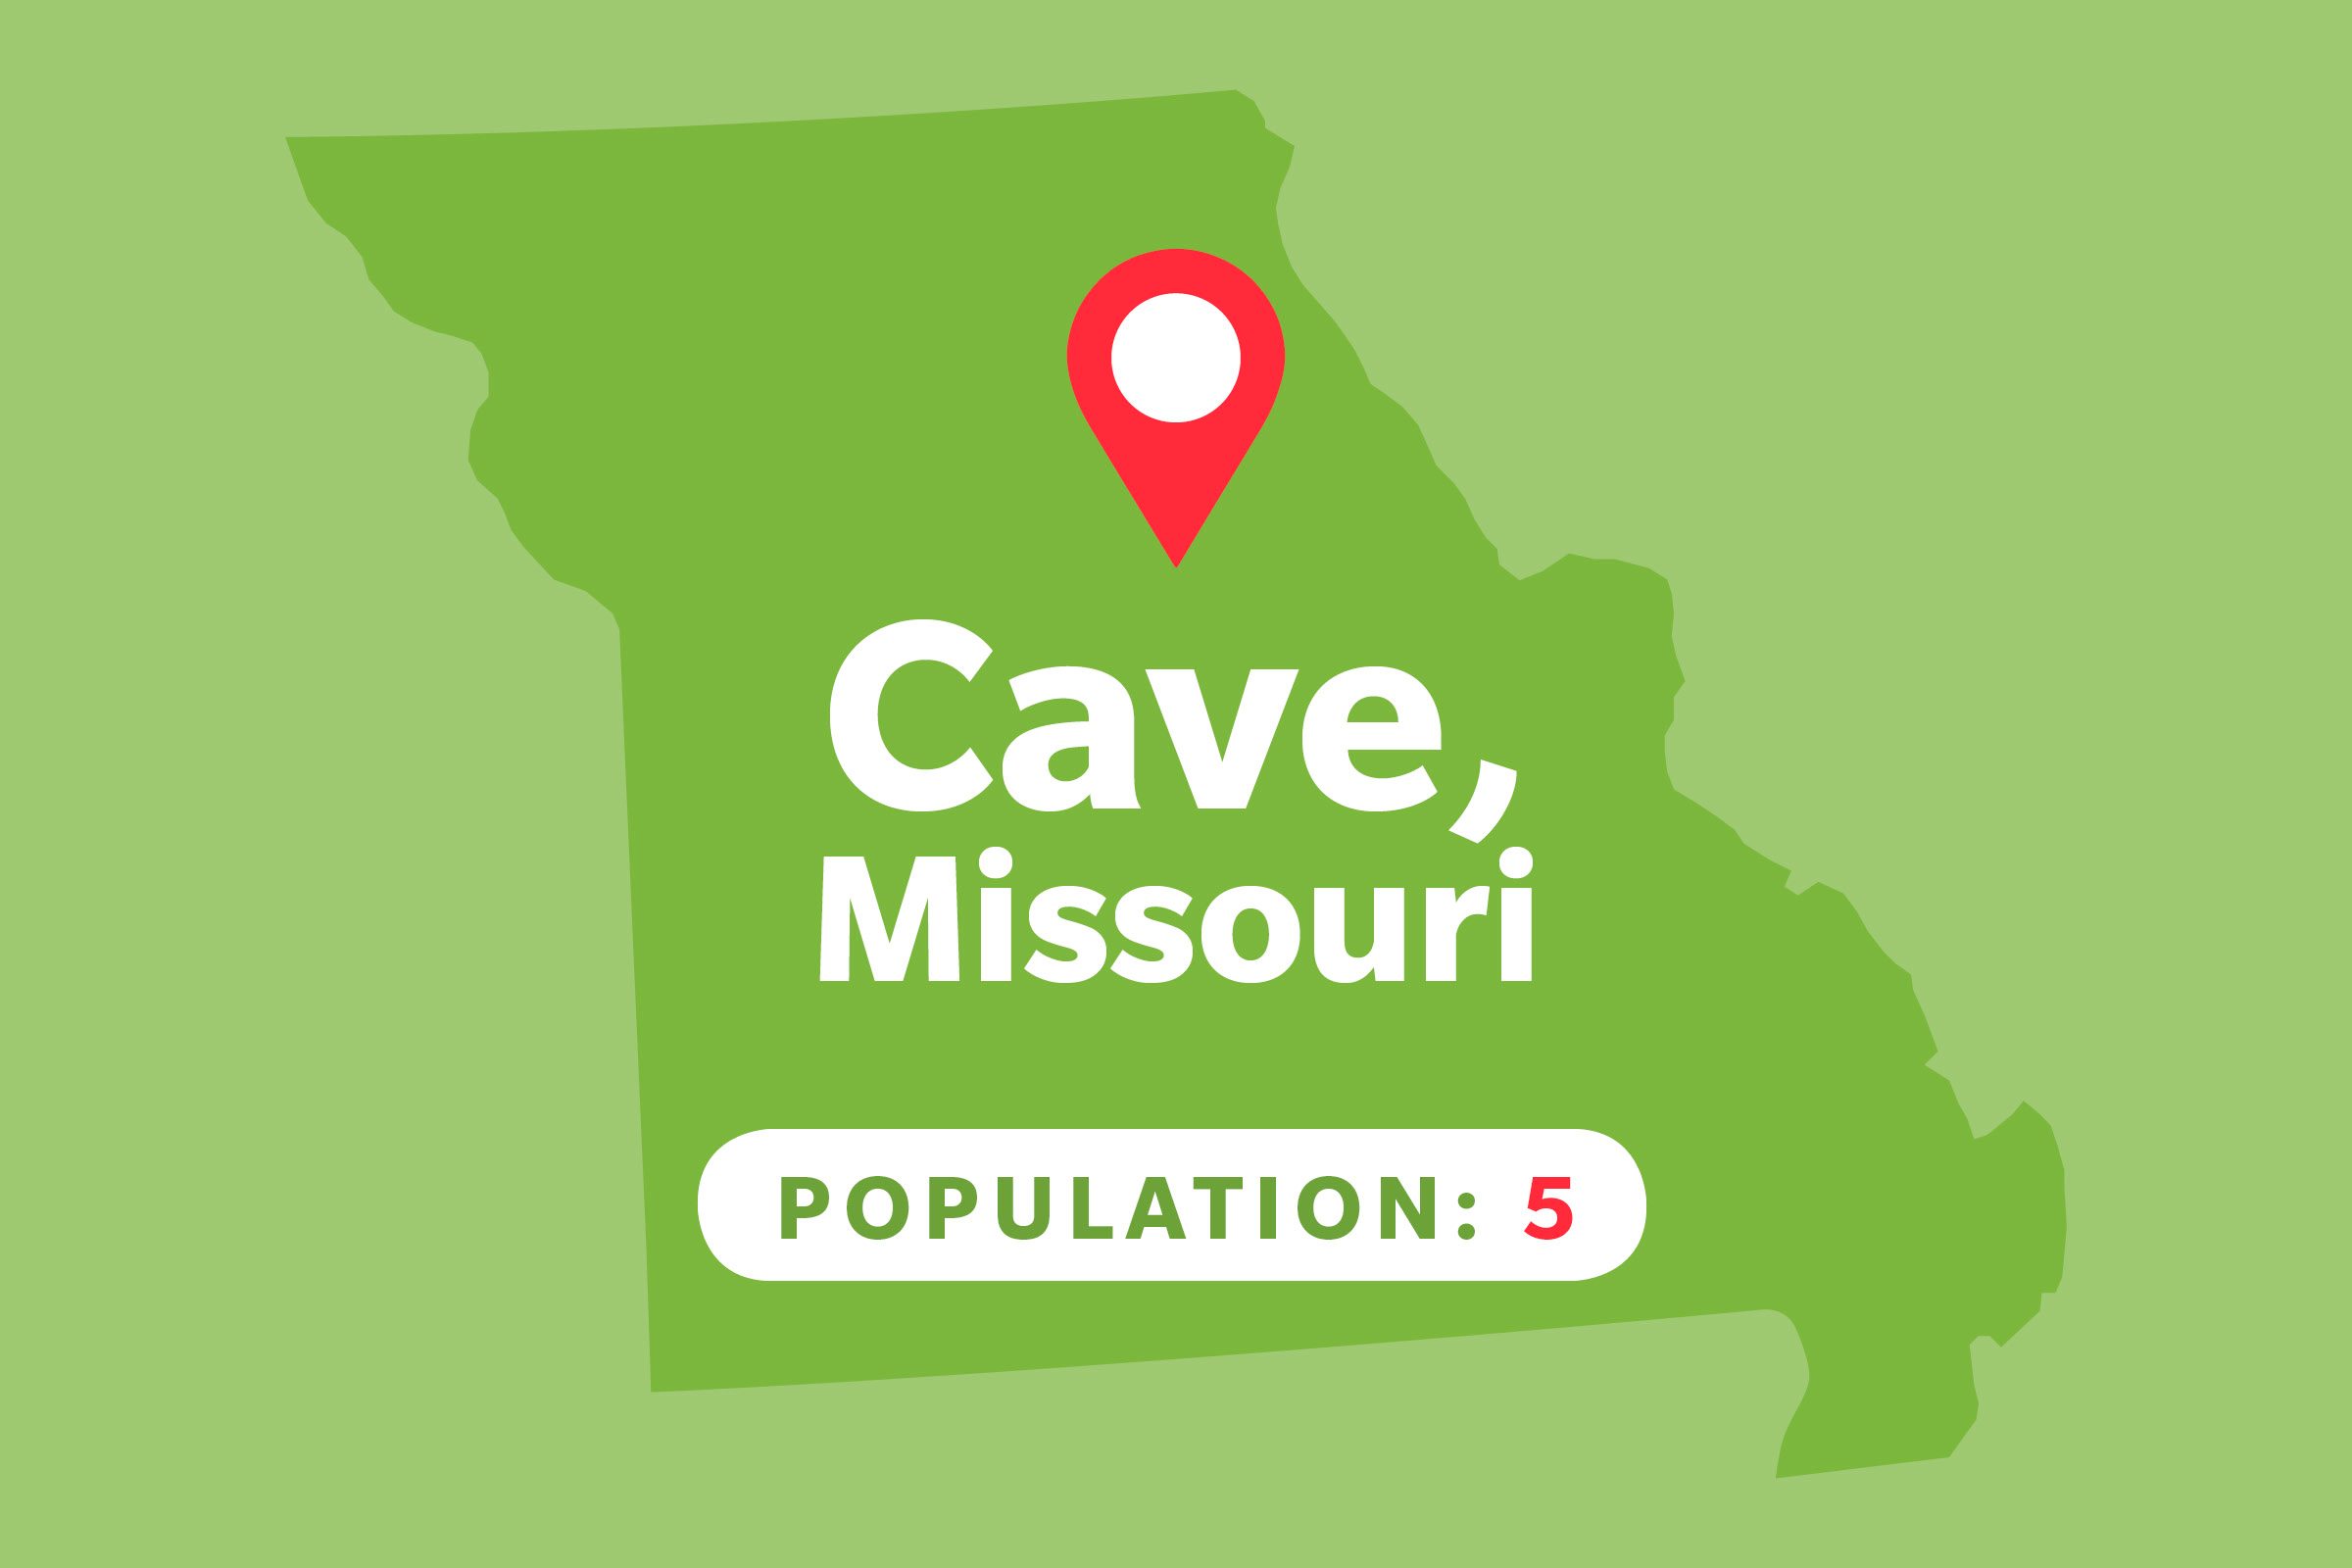 Cave, Missouri